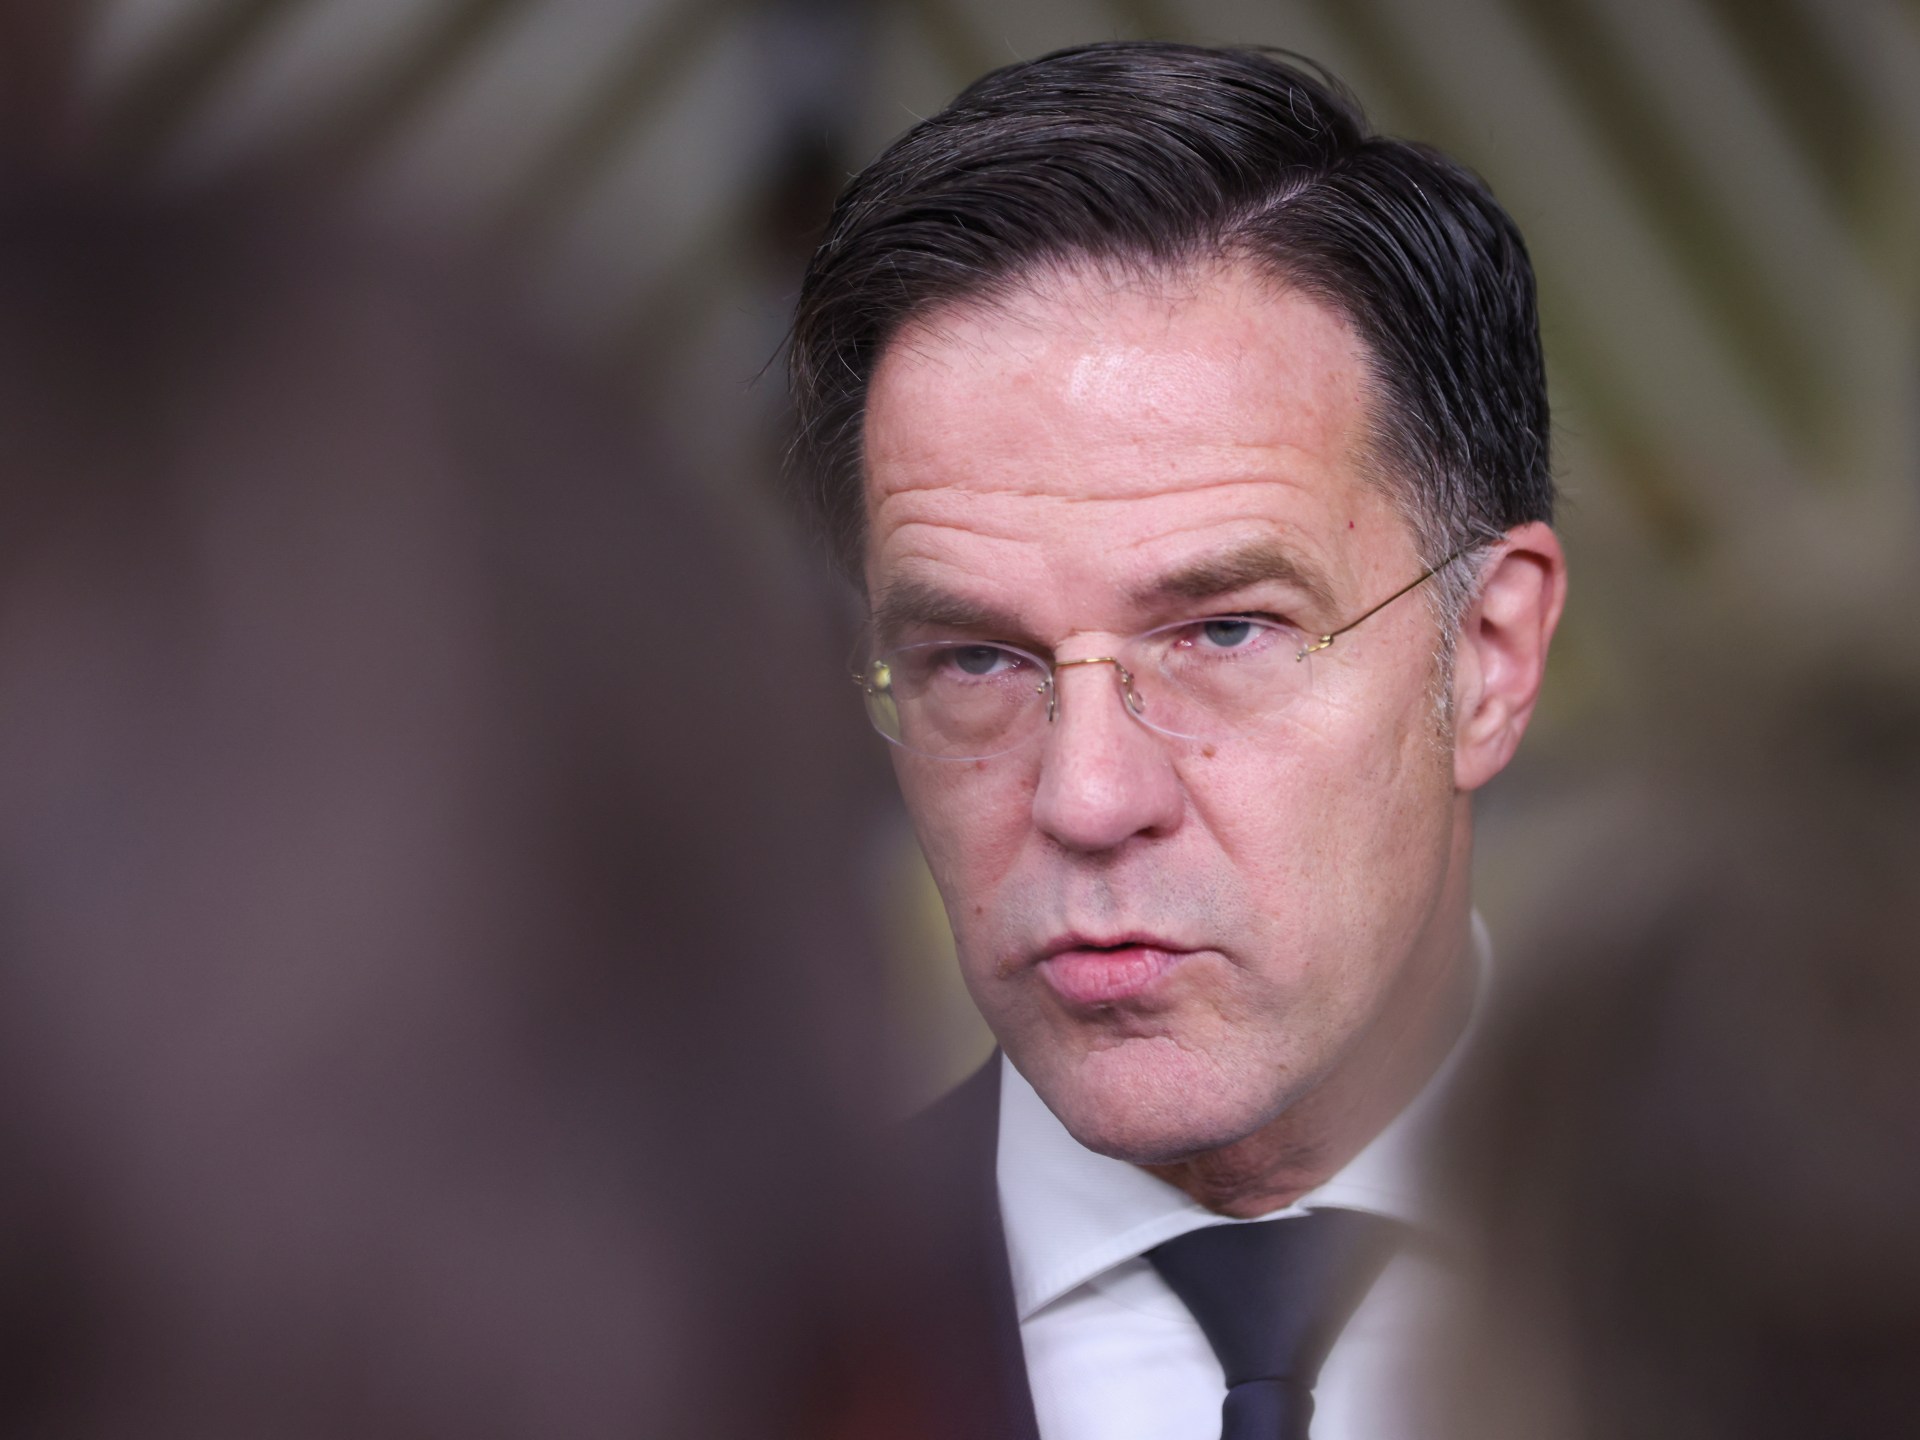 US, European powers back outgoing Dutch PM Mark Rutte as next NATO head | NATO News